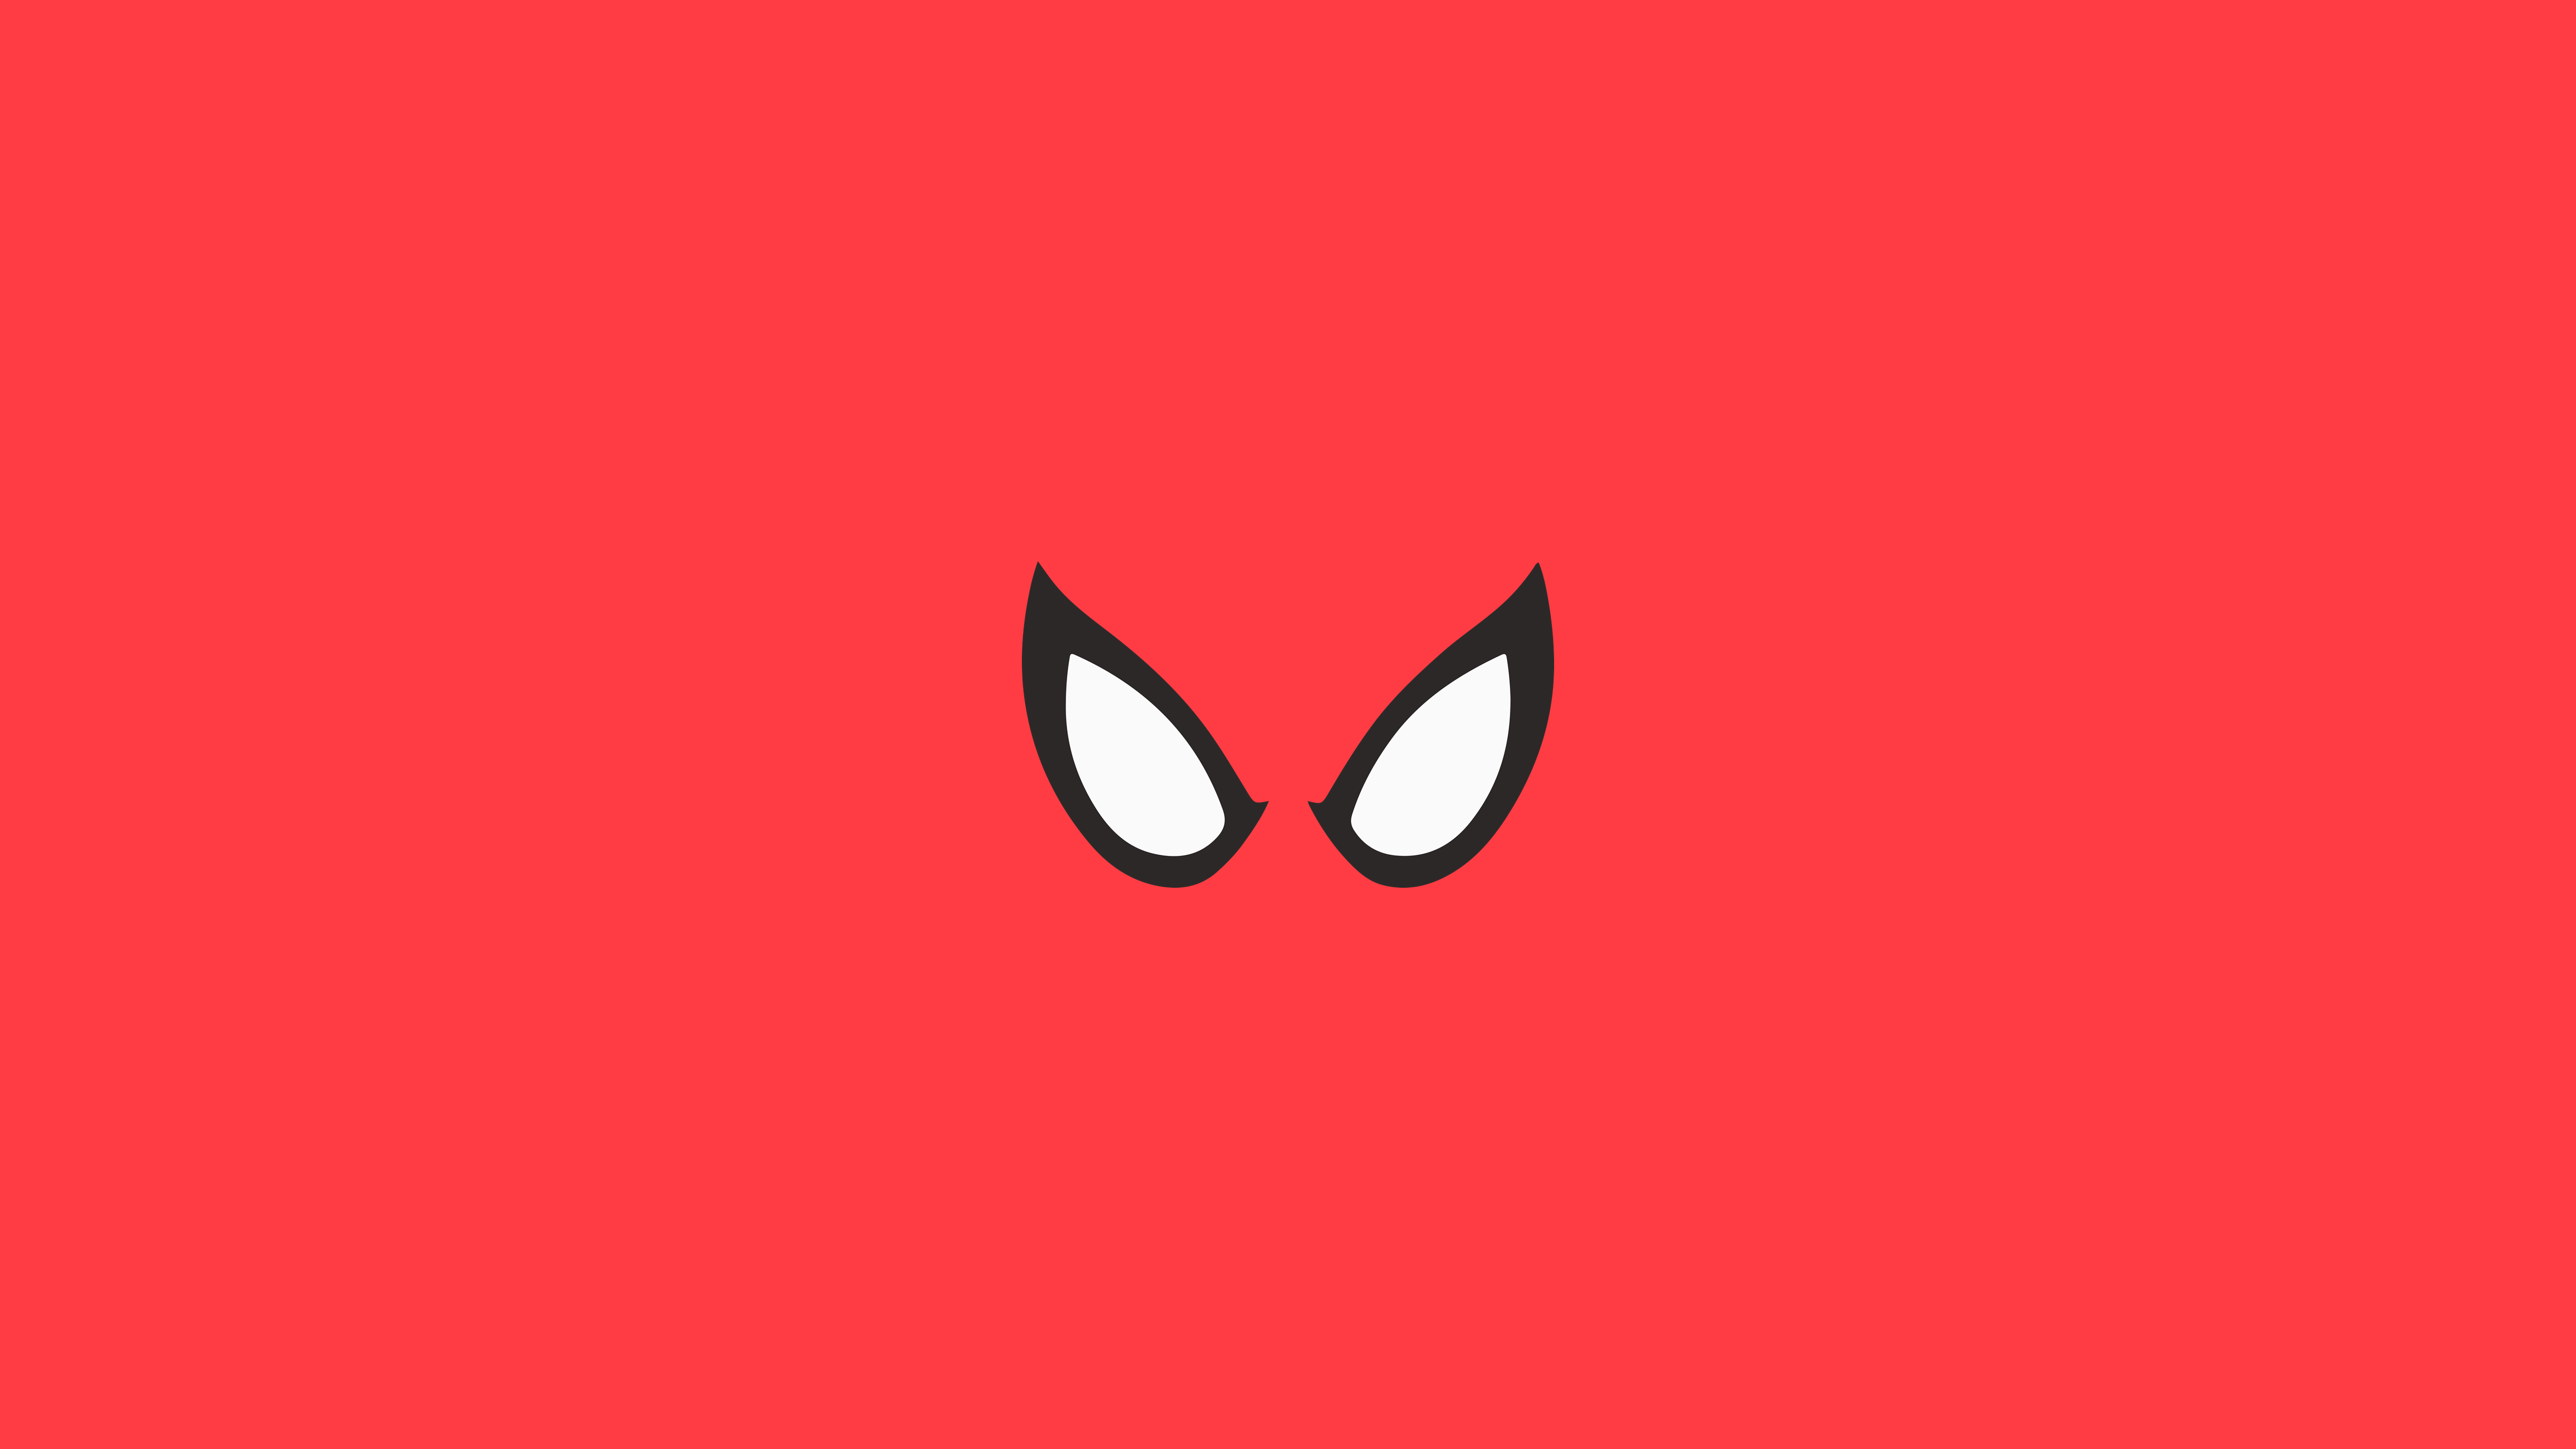 General 4608x2592 minimalism superhero Marvel Cinematic Universe Spider-Man frontal view red background red simple background digital art